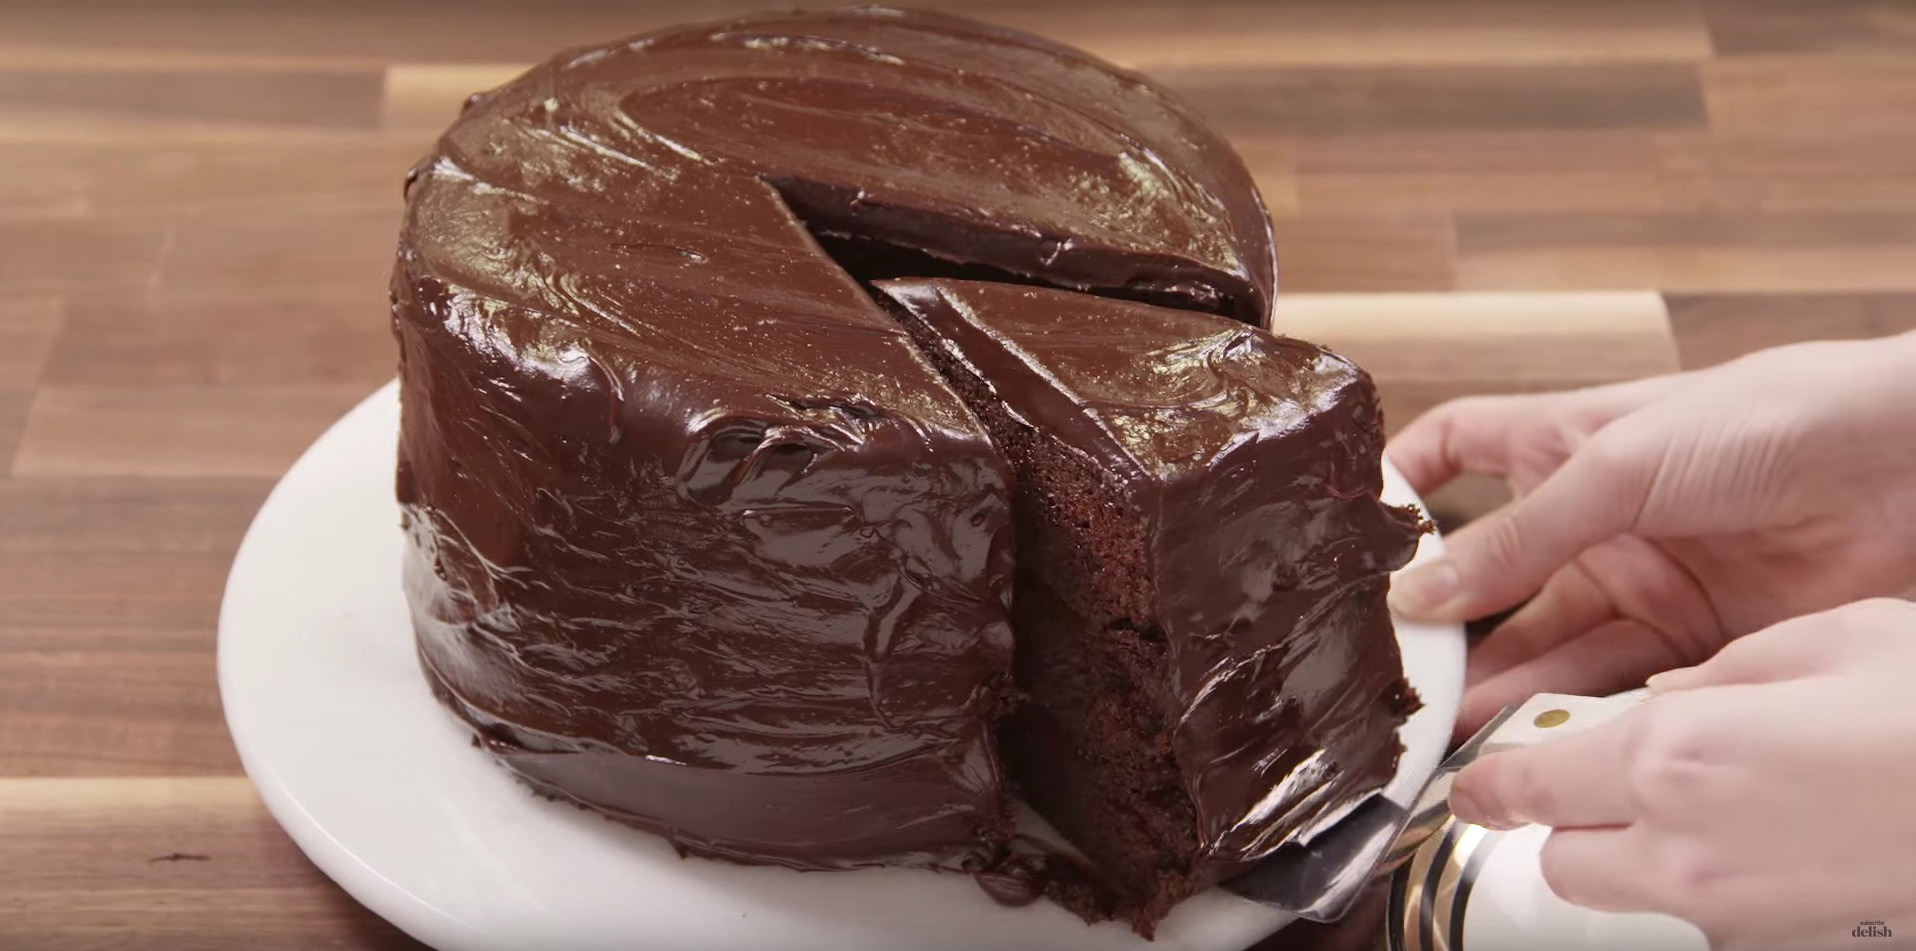 Chocolate Cake Matilda
 Here’s How to Bake That Famous ‘Matilda’ Inspired Cake